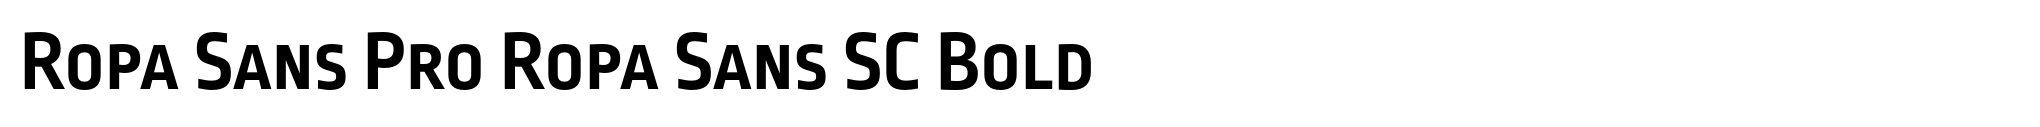 Ropa Sans Pro Ropa Sans SC Bold image